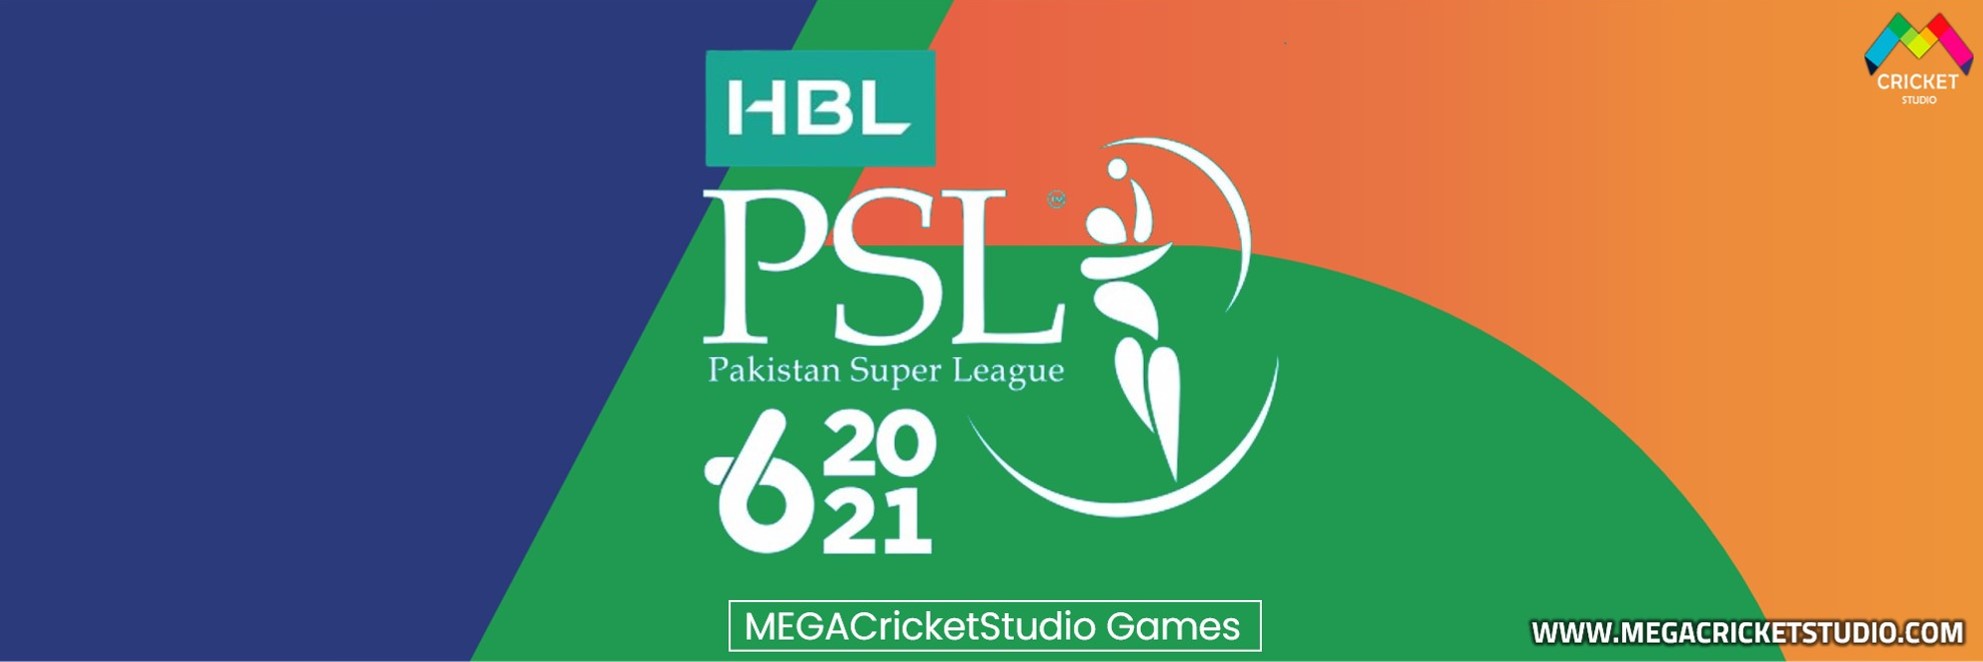 HBL PSL 2022 Patch for EA Cricket 07